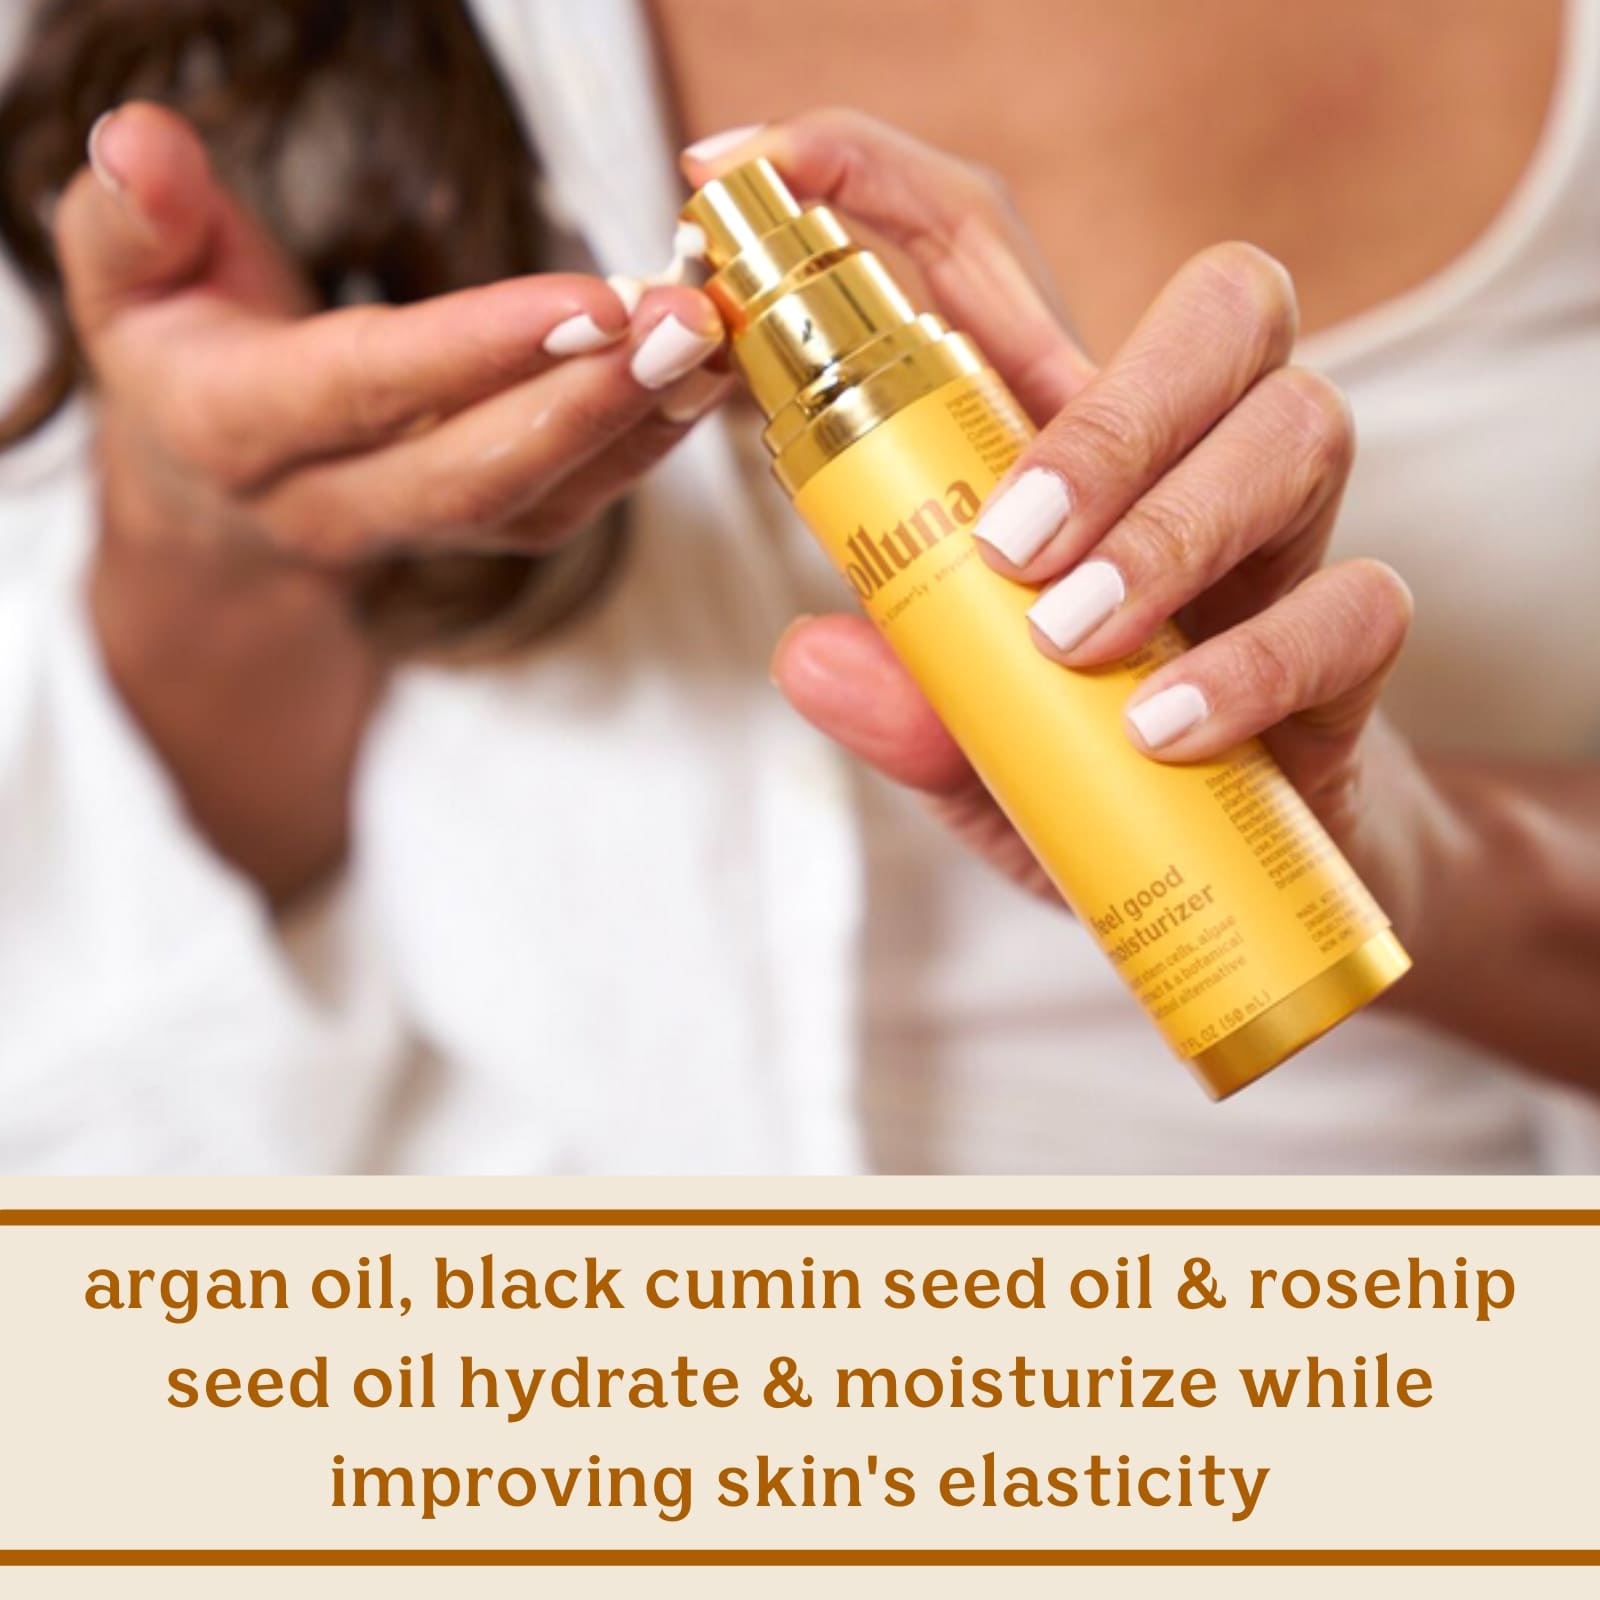 Solluna's Feel Good Moisturizer key ingredient benefit description. Argan oil, black cumin seed oil & rosehip seed oil hydrate & moisturize while improving skin's elasticity